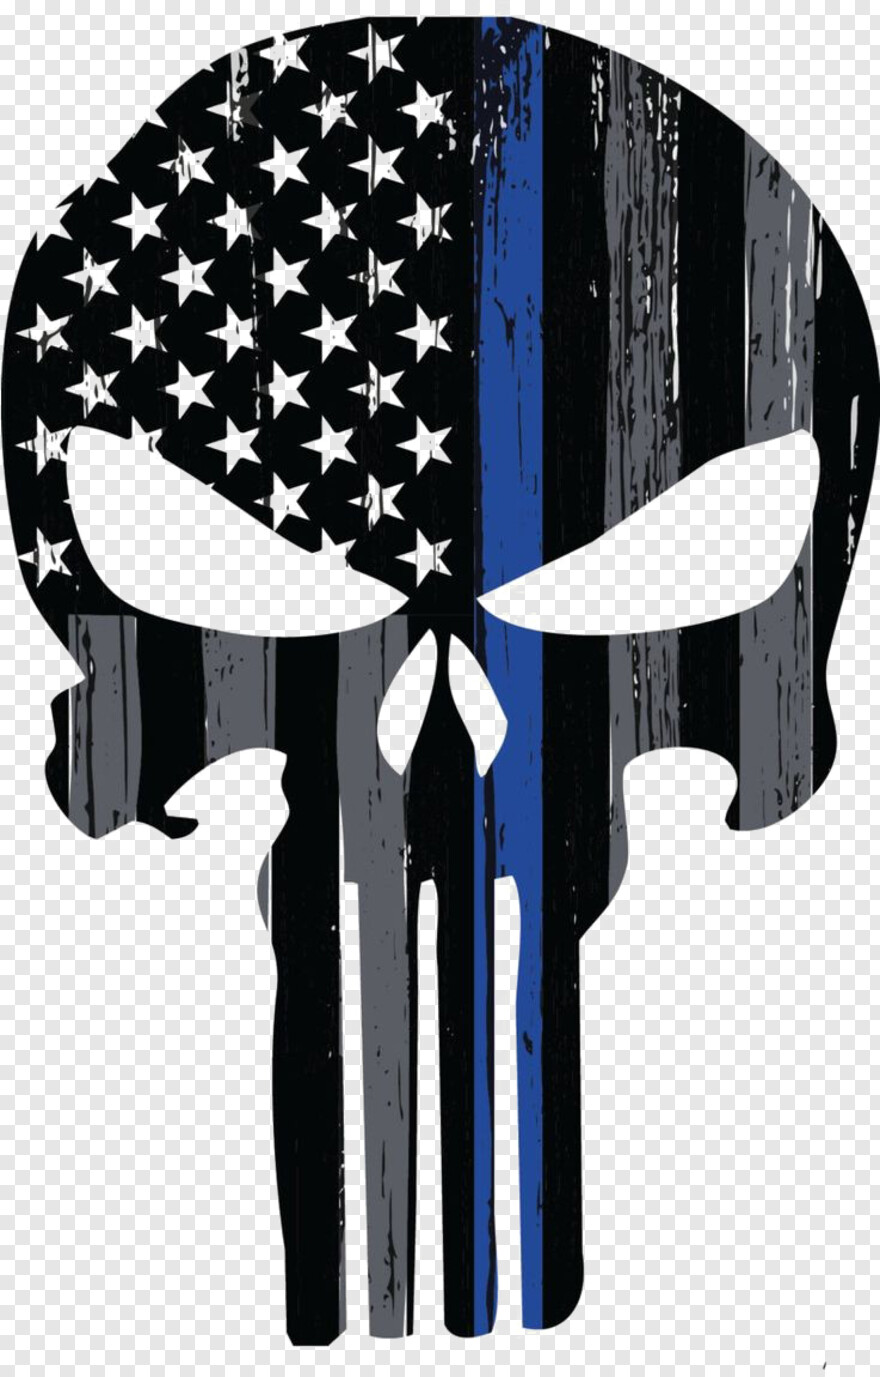  Punisher Logo, Bull Skull, Punisher Skull, Punisher, Blue Line, Pirate Skull